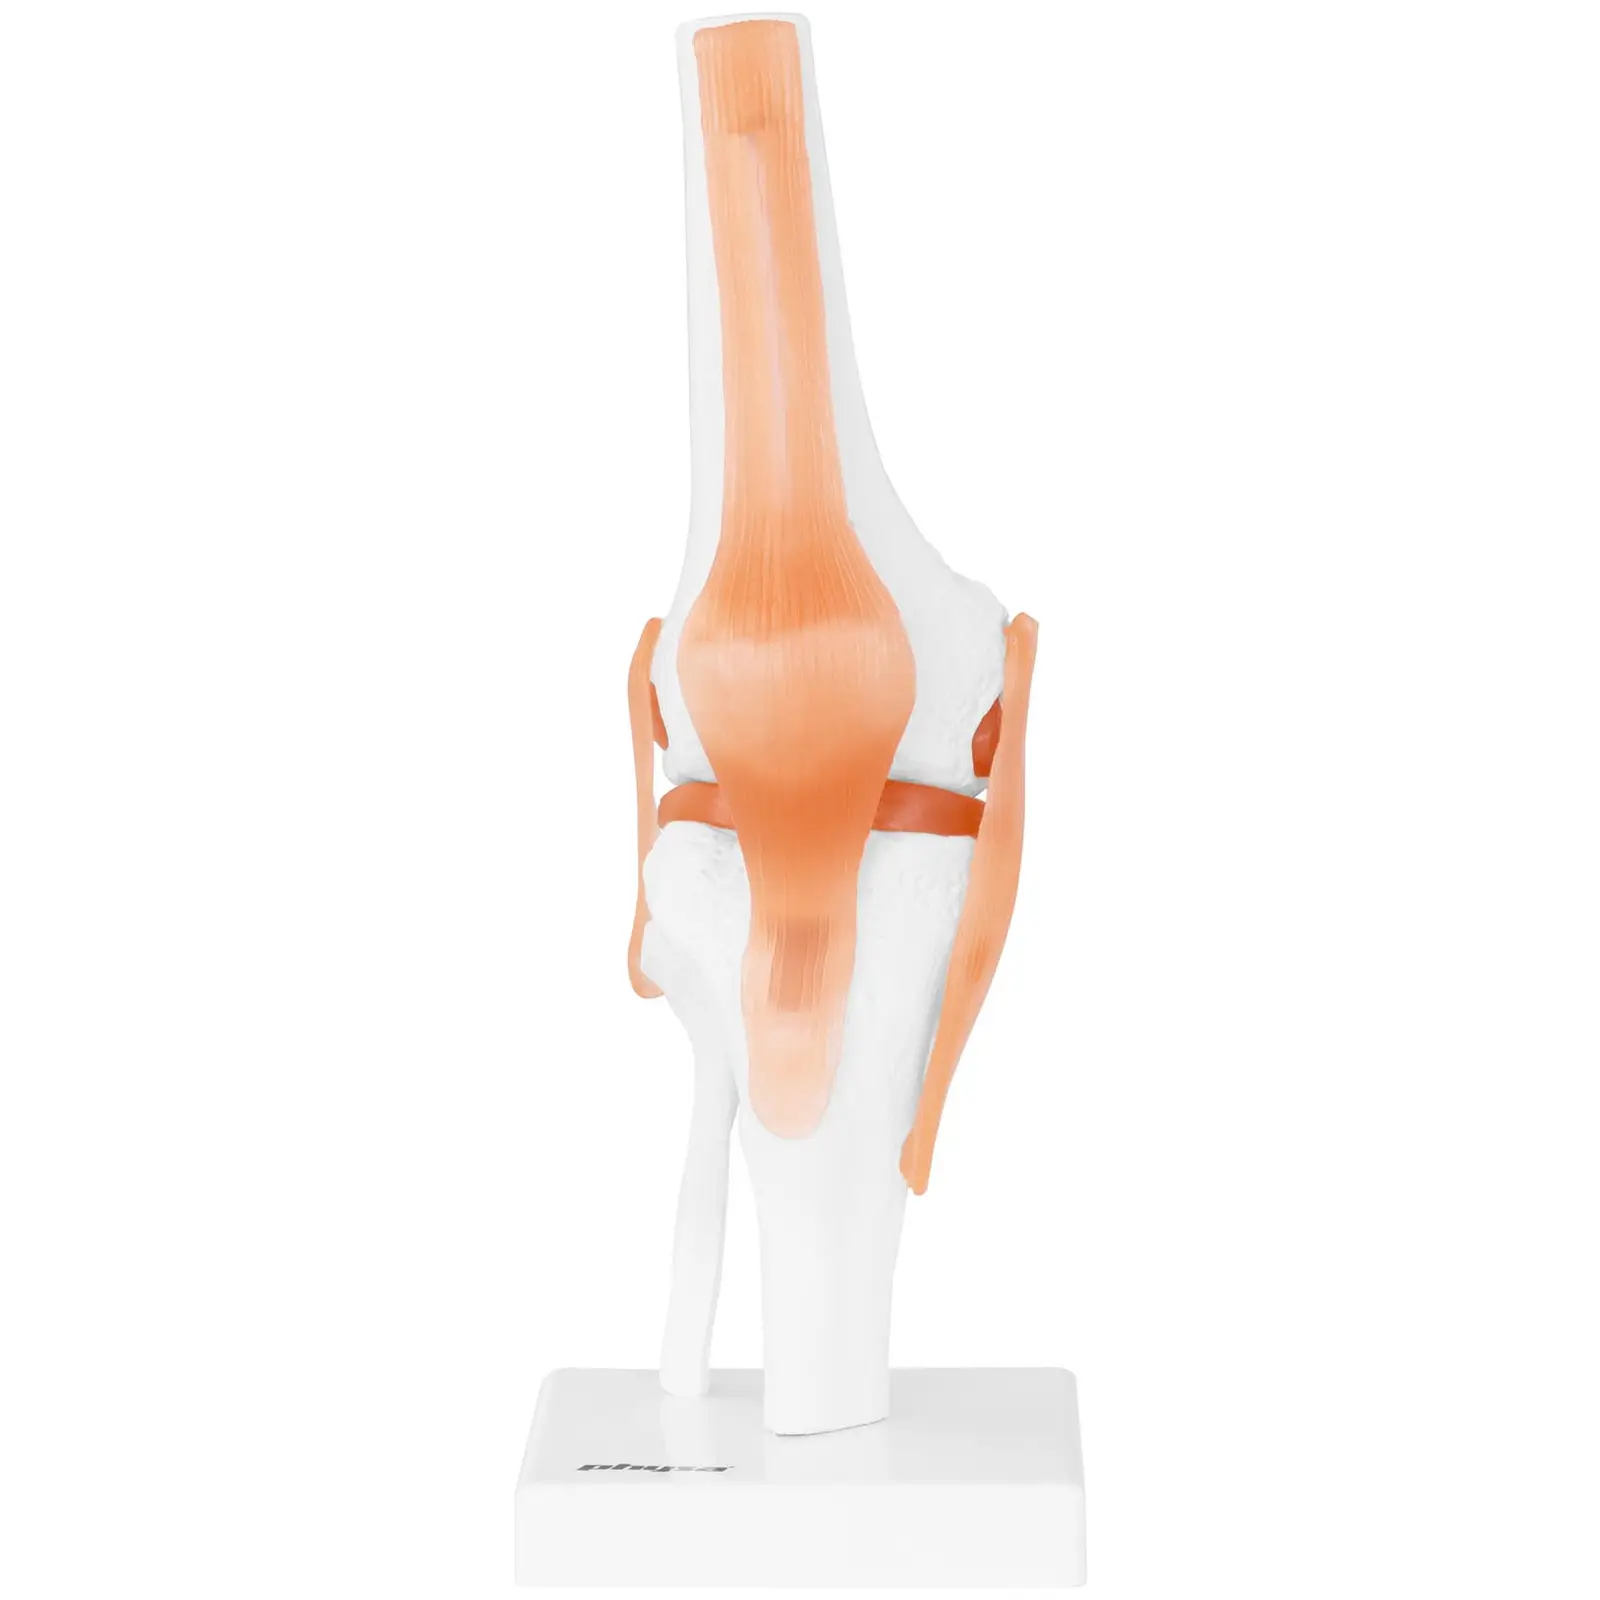 Modelo anatómico de rodilla